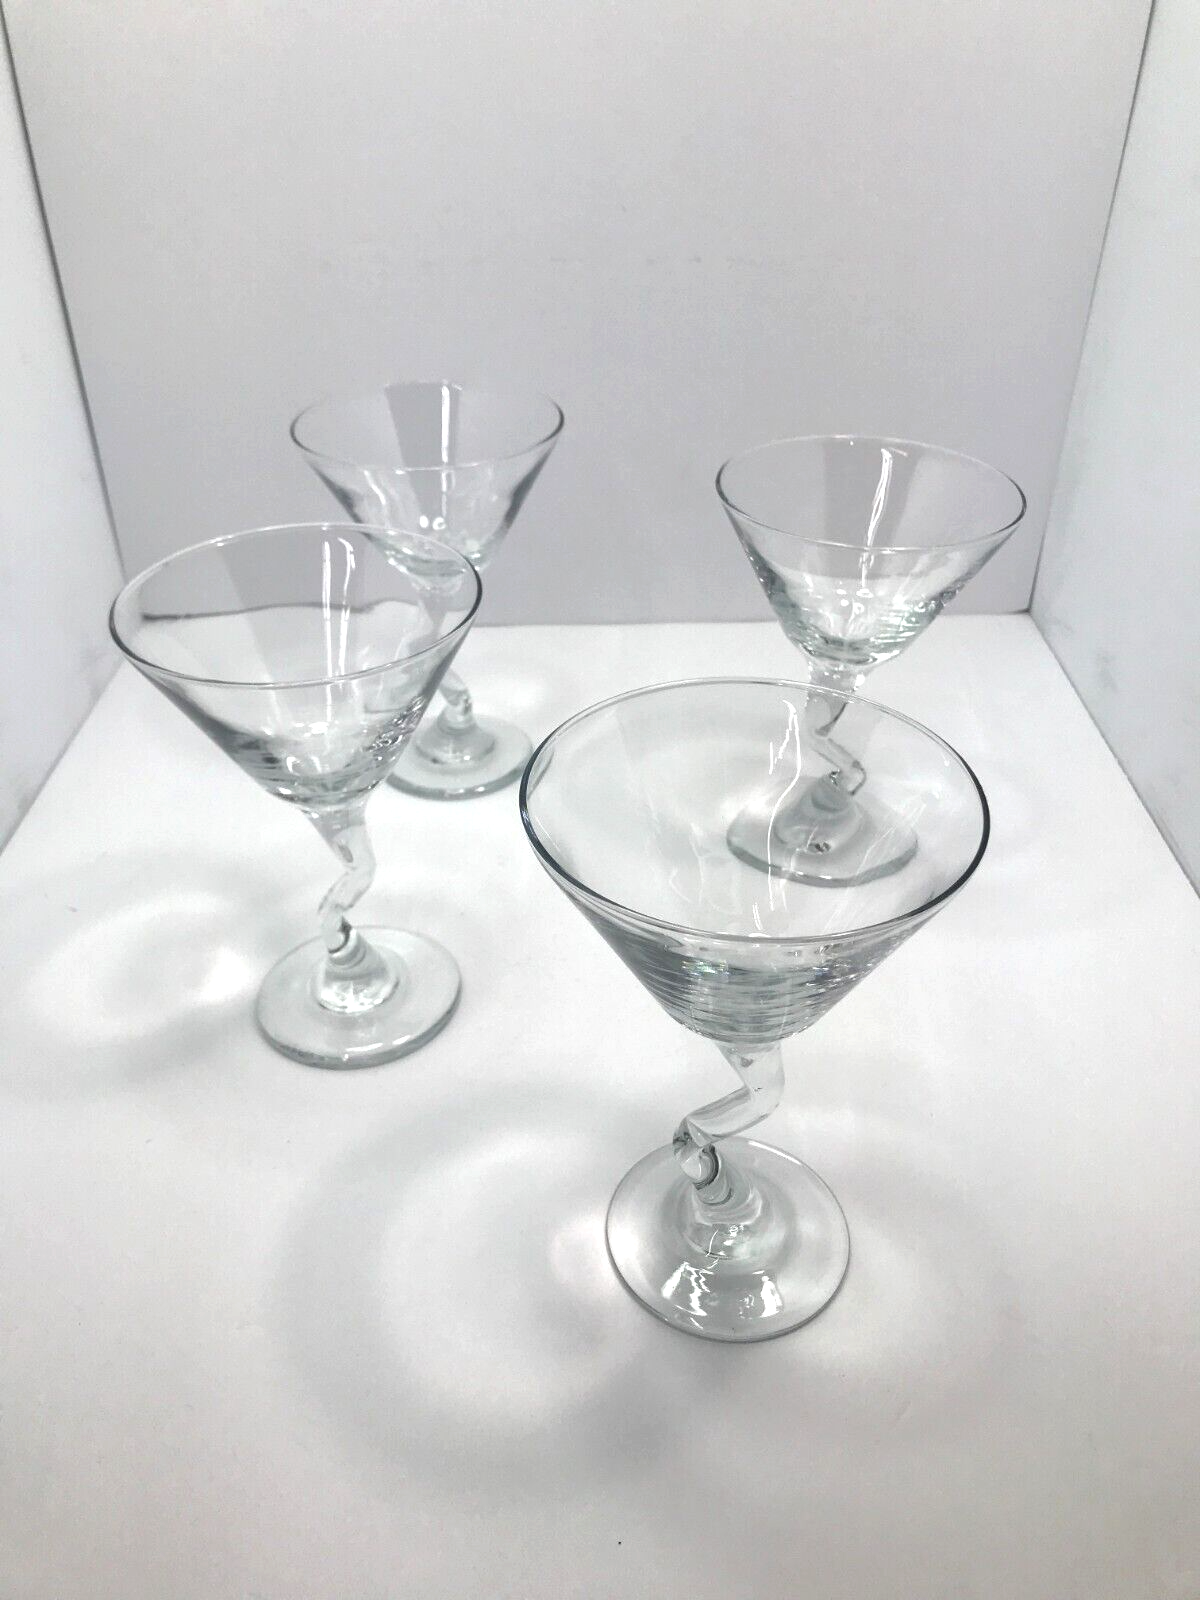 Vintage Art Deco Libbey Zig Zag Bent Z Stem Clear Glass Martini Glasses Set of 4 - $24.74